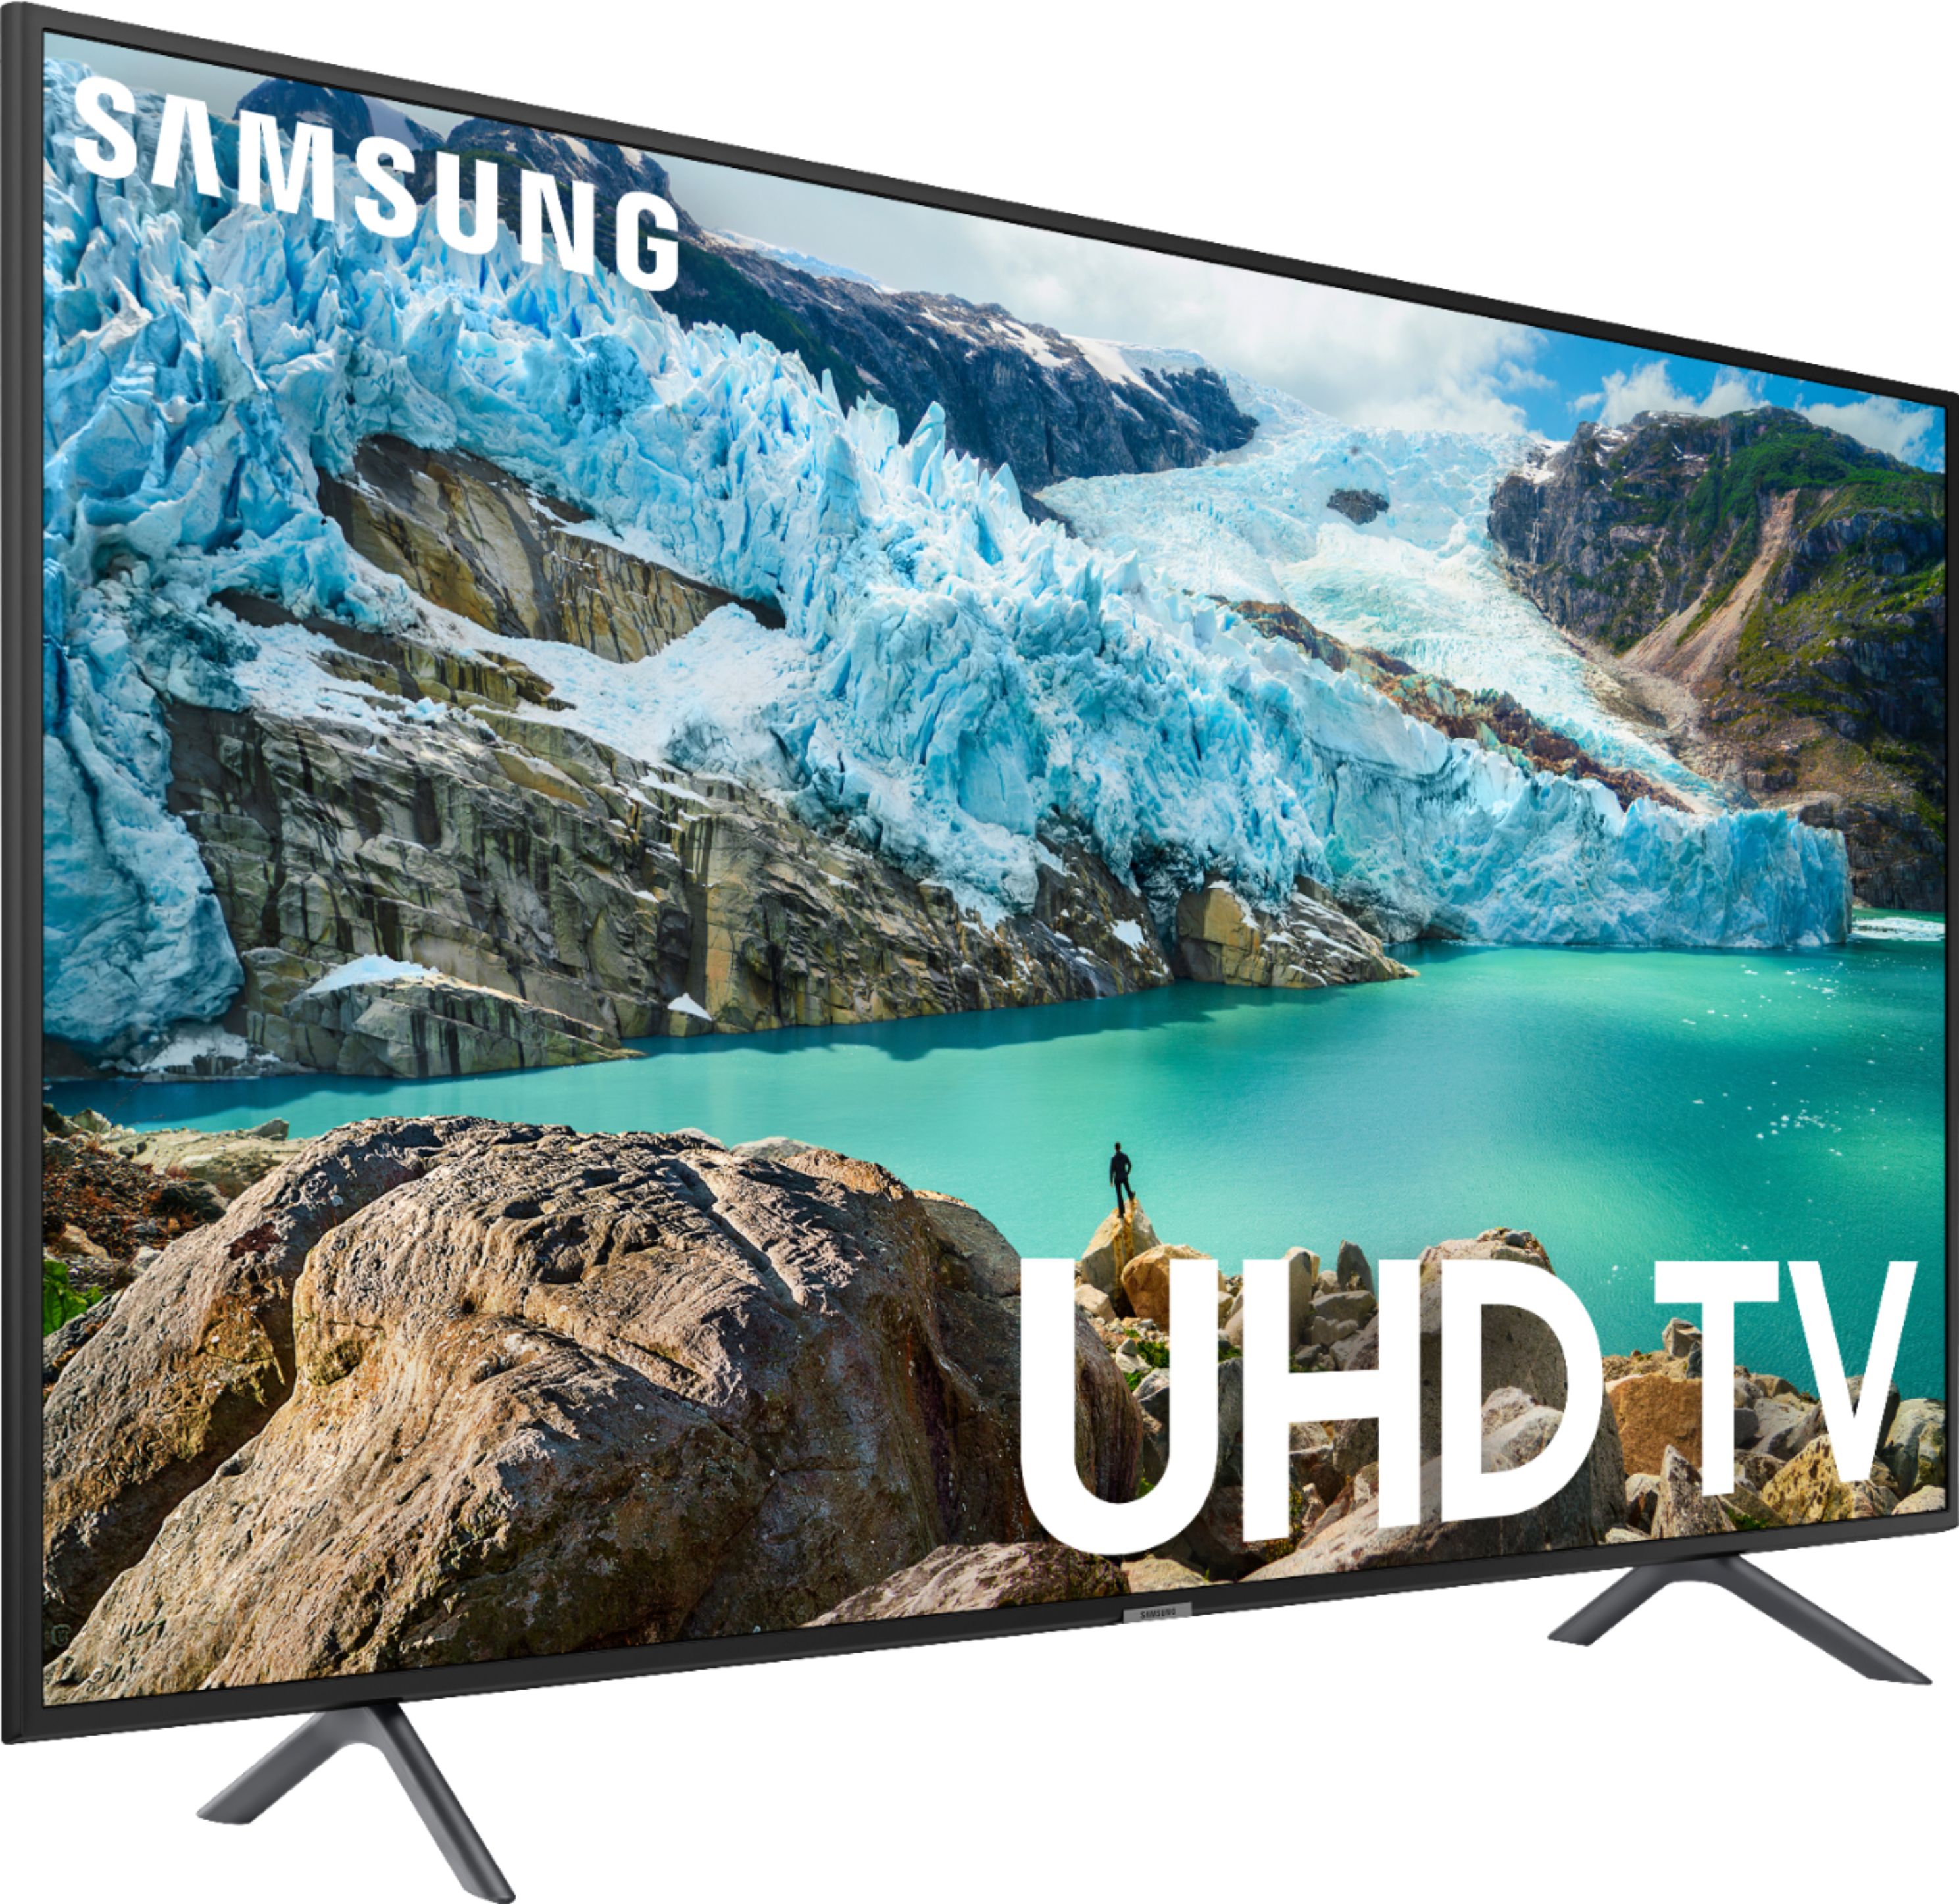 Angle View: Samsung - 55" Class 7100 Series LED 4K Smart Tizen TV